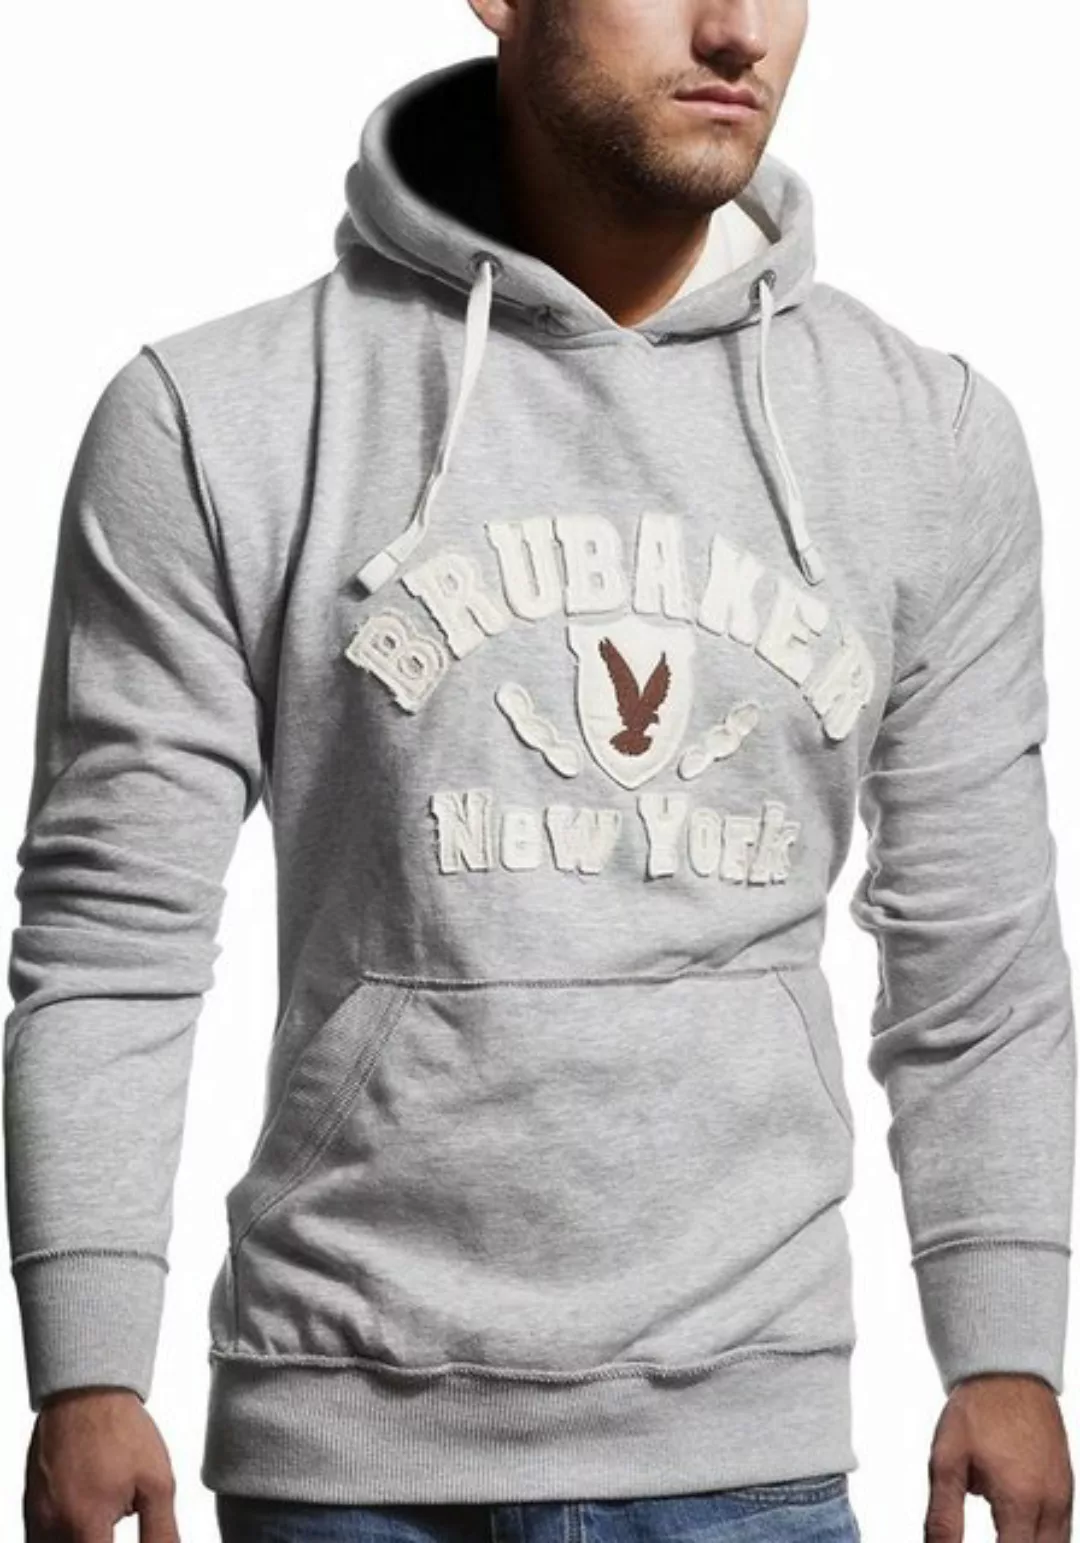 BRUBAKER Kapuzensweatshirt Herren Sweatshirt mit Kapuze - New York Eagle (1 günstig online kaufen